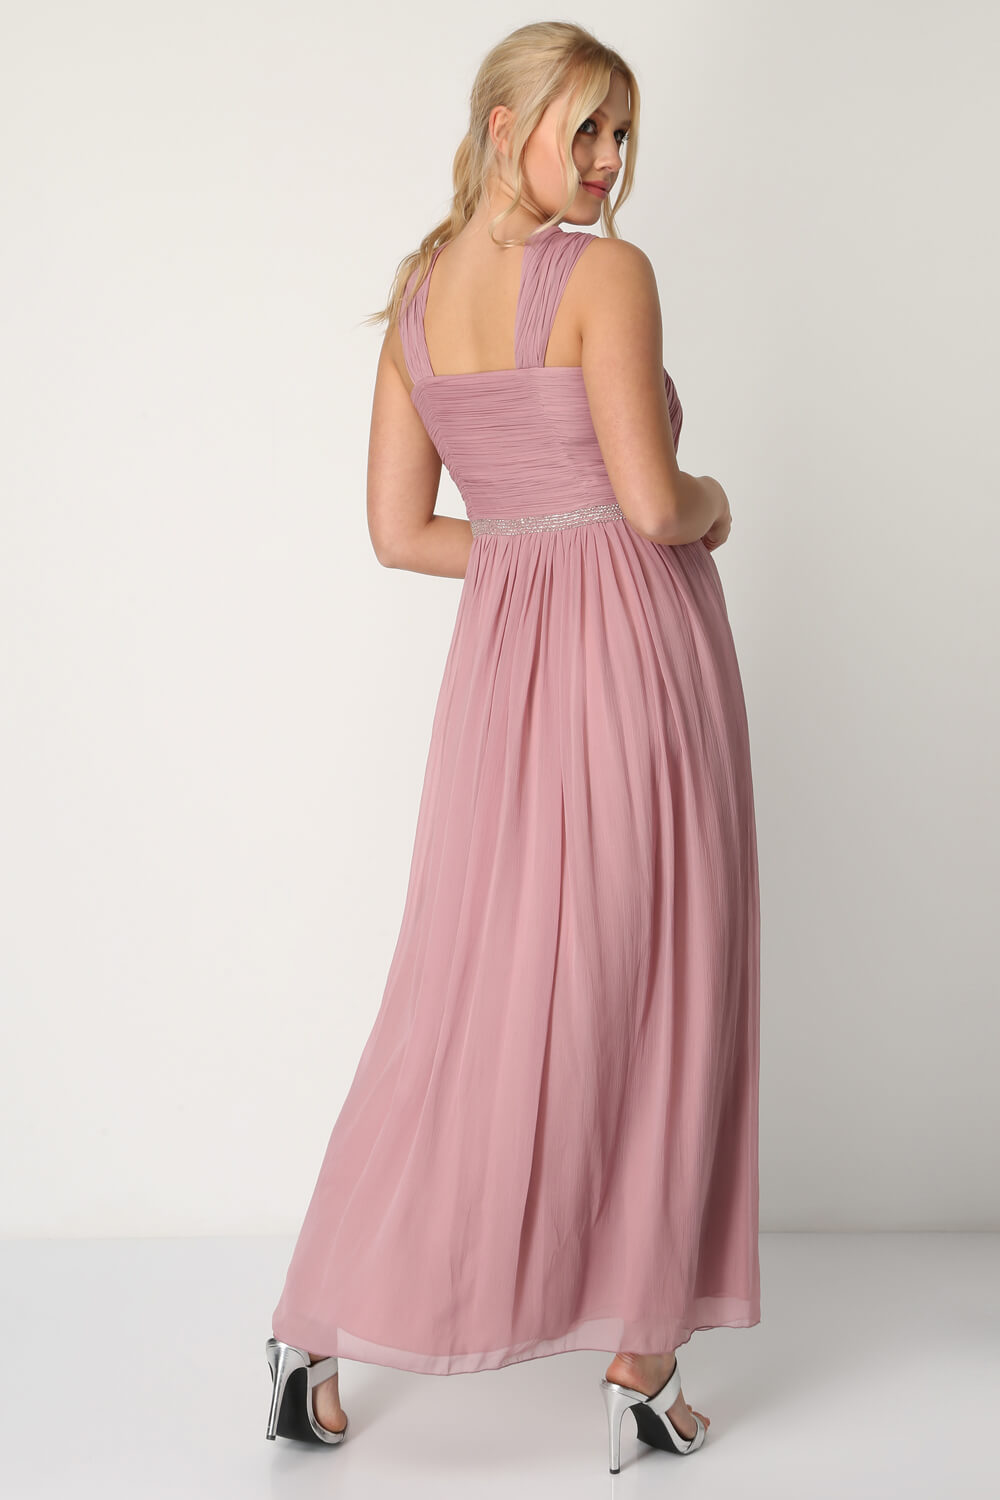 Bead Embellished Maxi Dress in Rose - Roman Originals UK